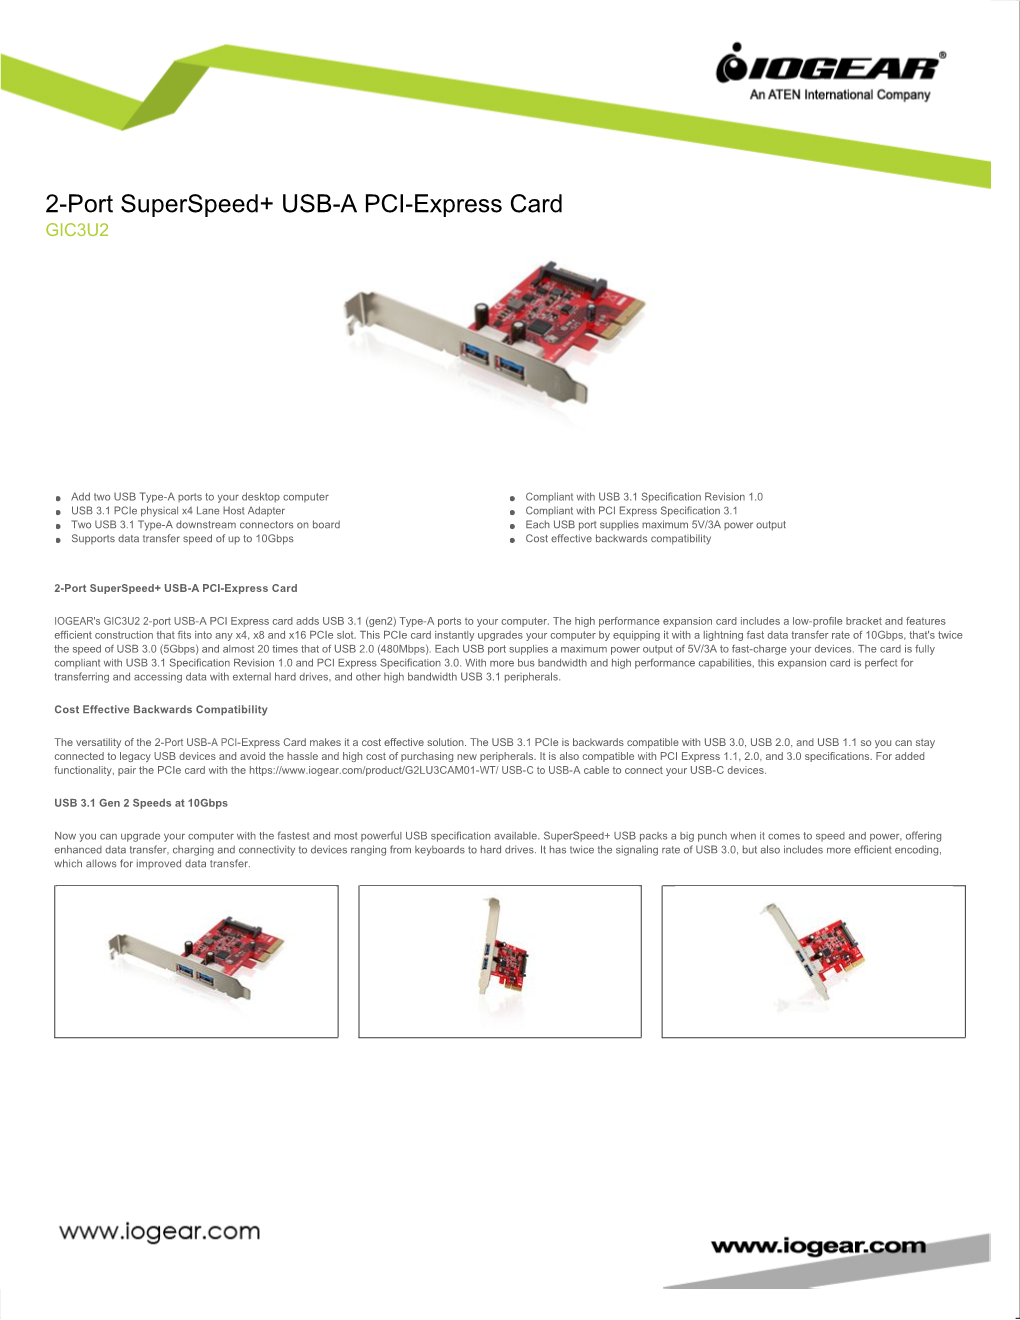 2-Port Superspeed+ USB-A PCI-Express Card GIC3U2